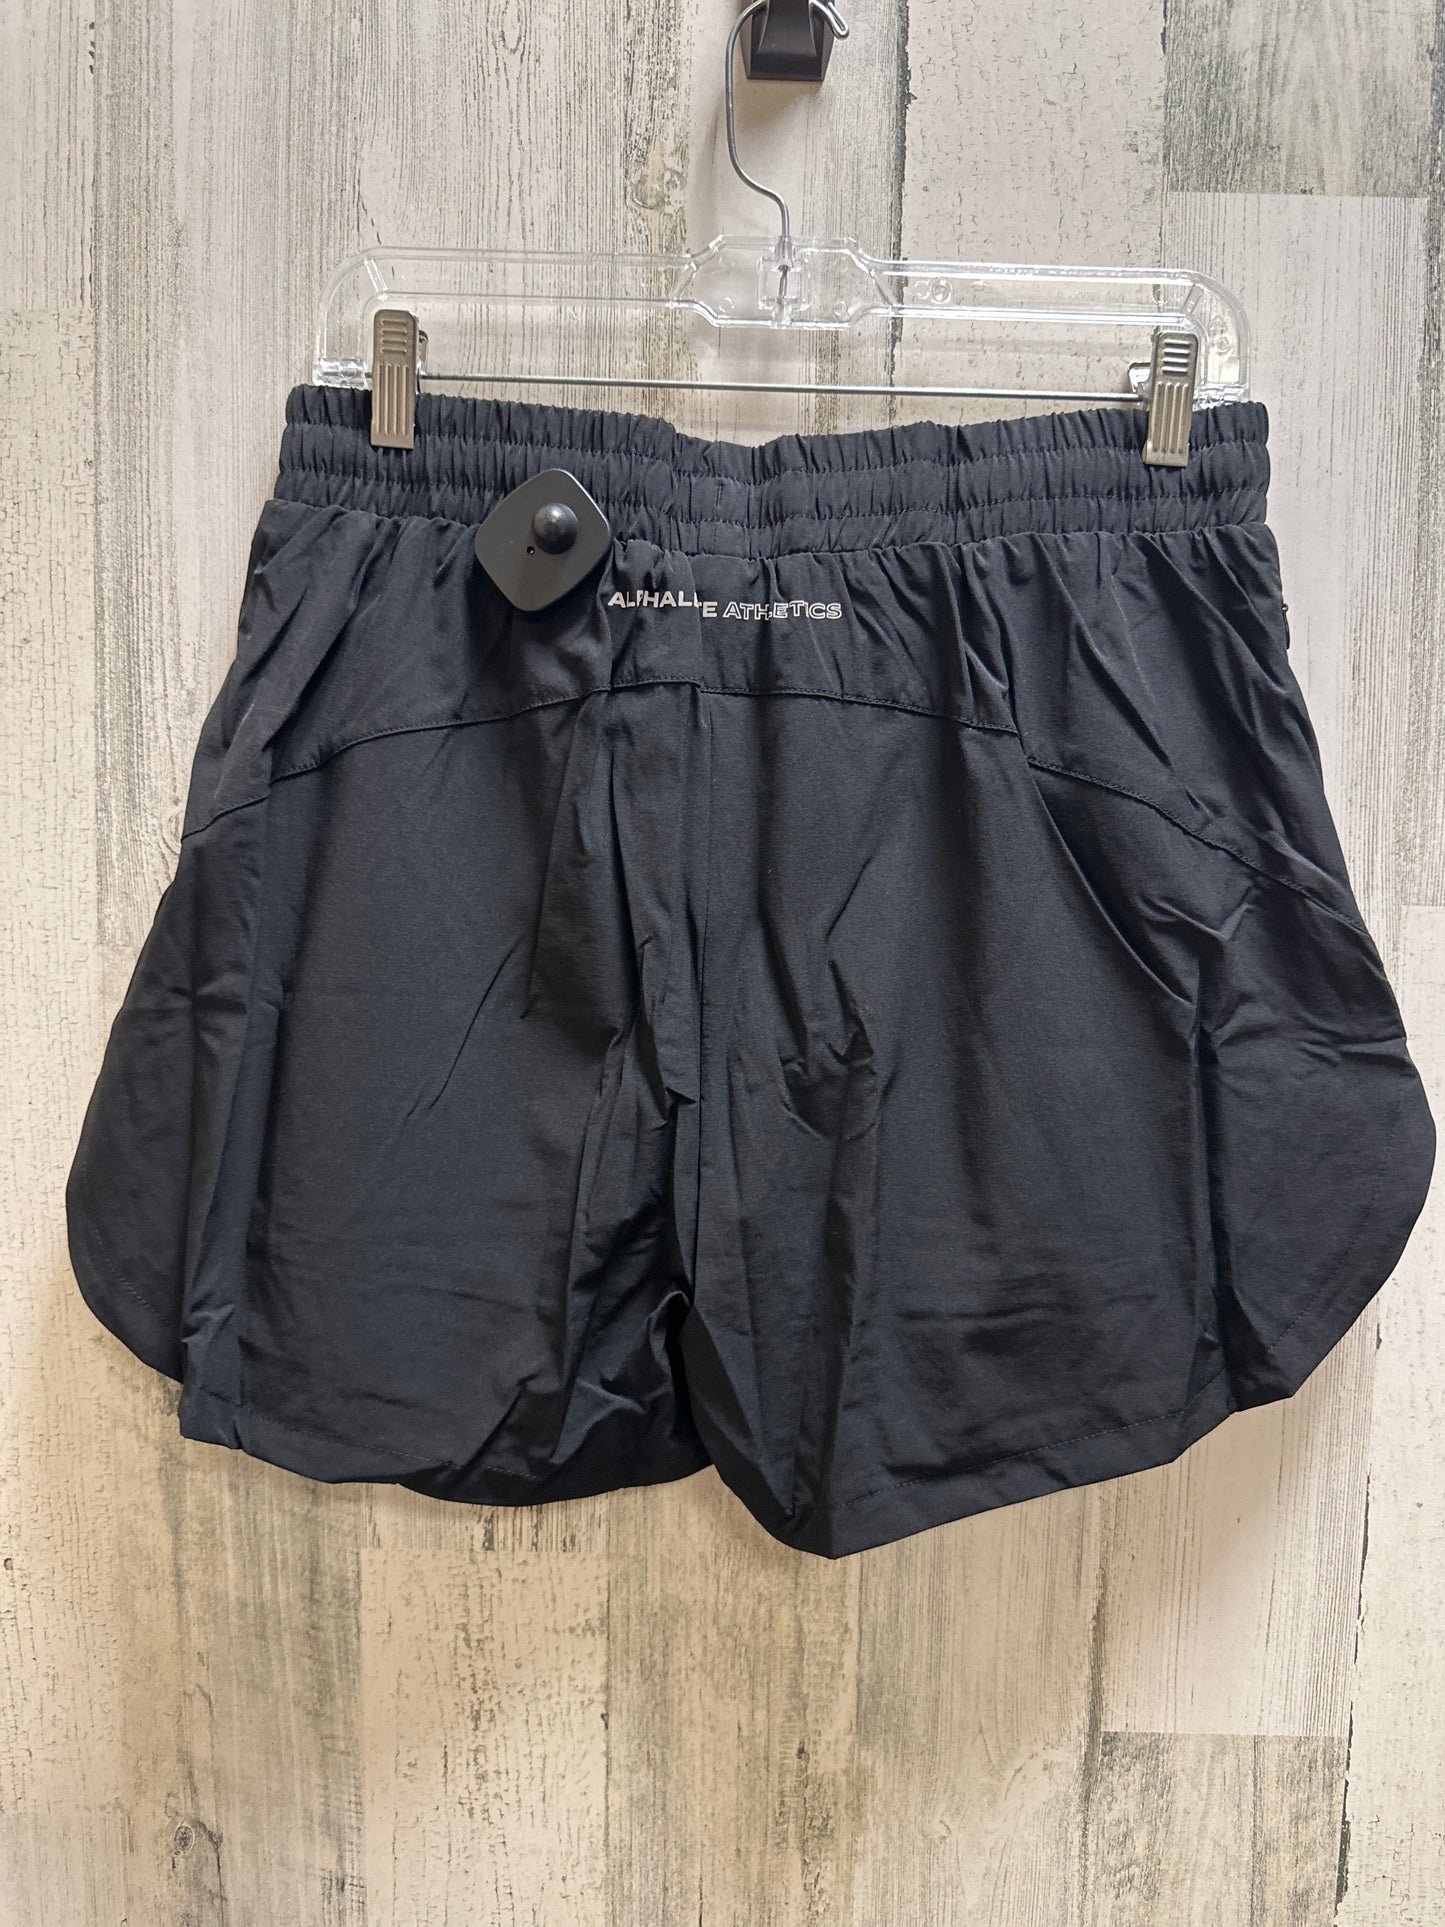 Black Athletic Shorts Clothes Mentor, Size Xl